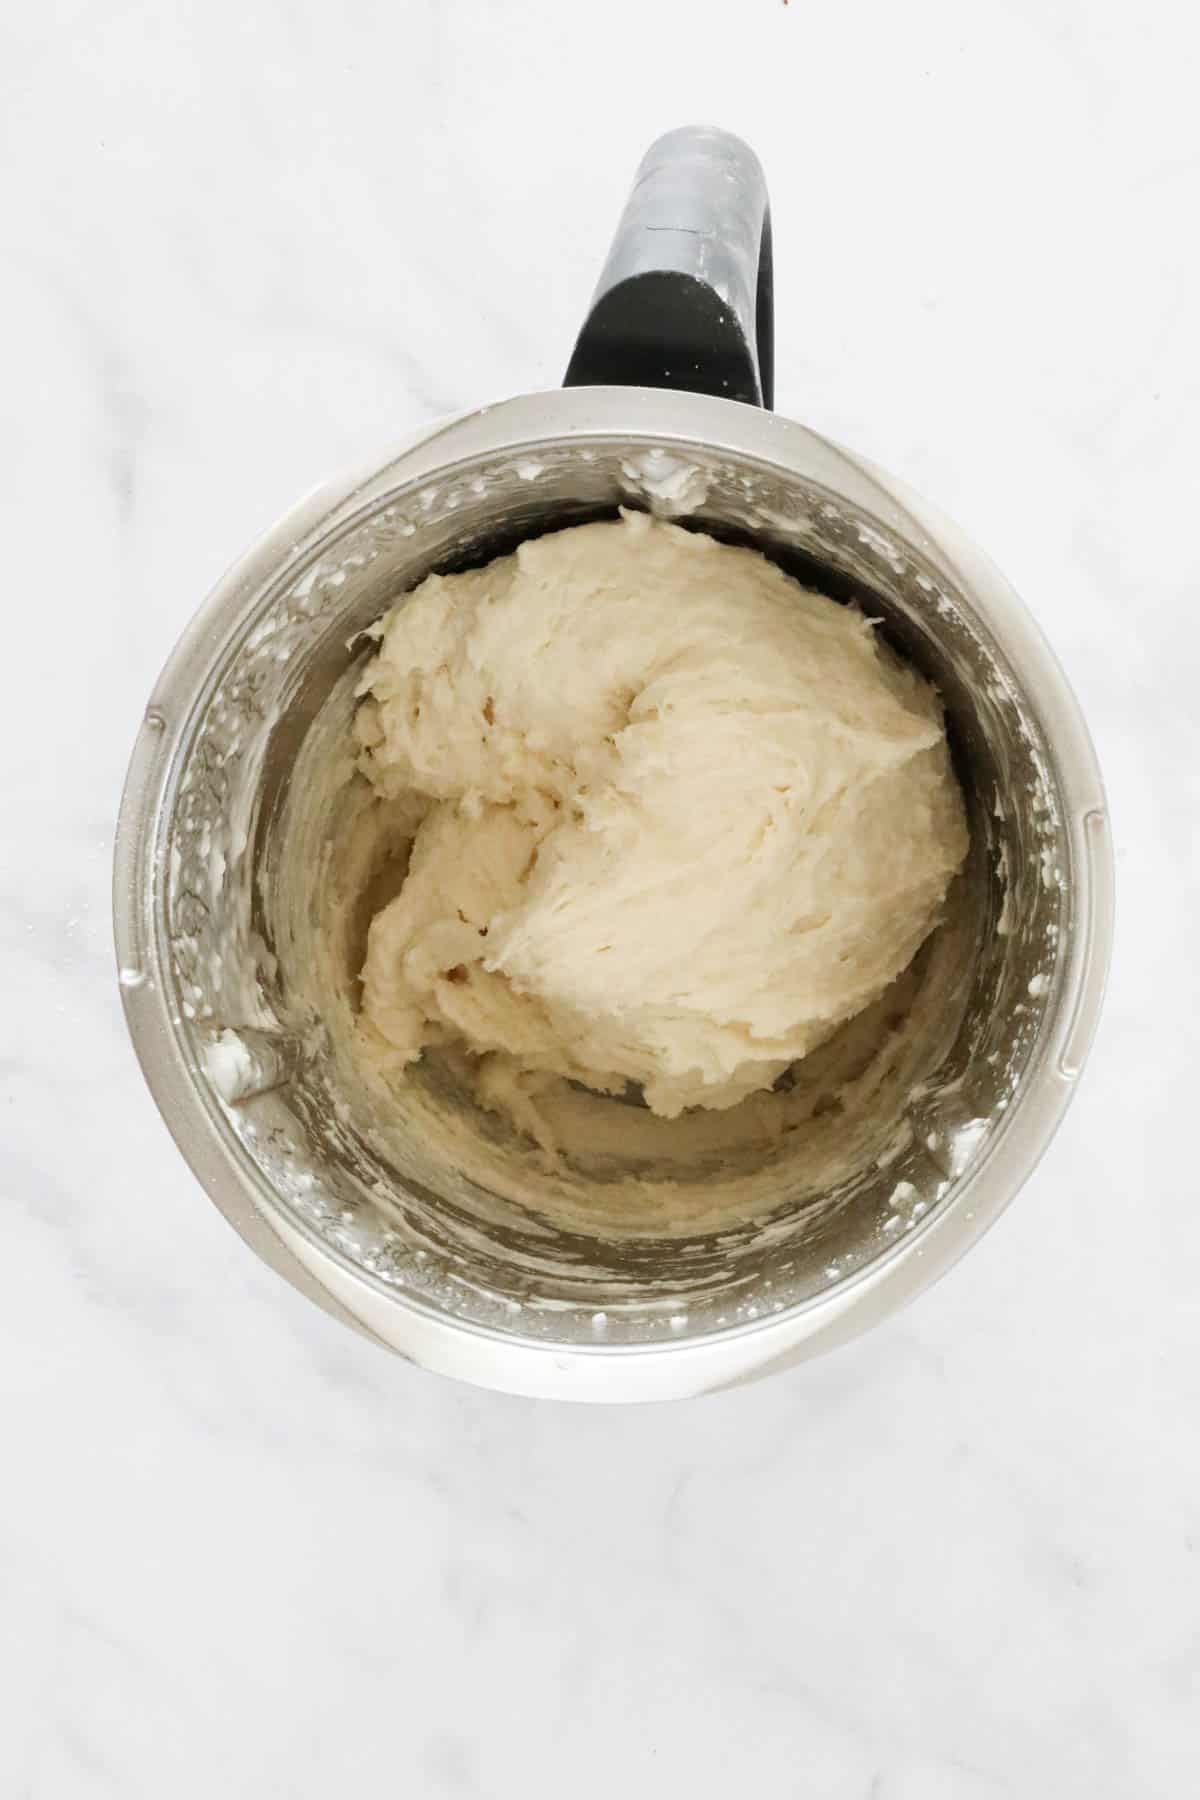 Bread dough in a Thermomix jug.